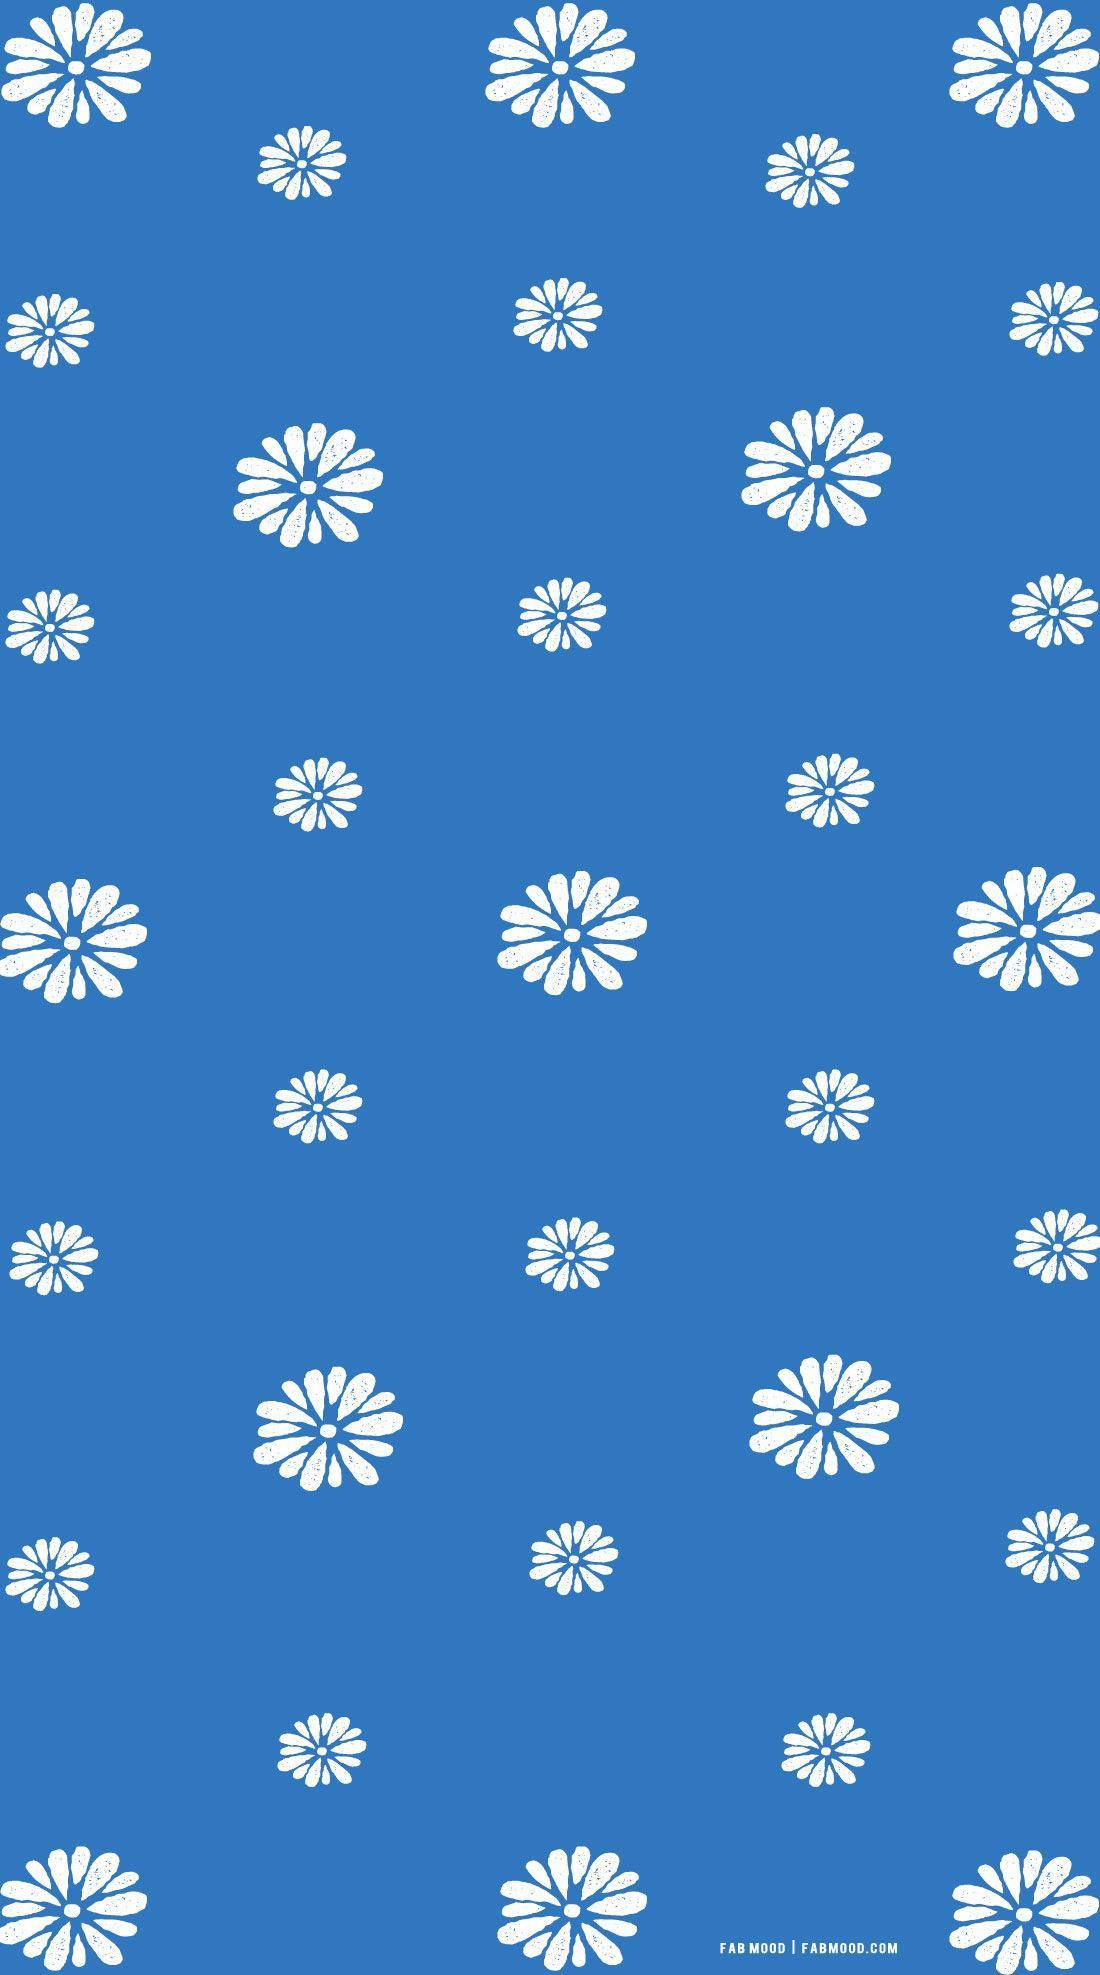 Azure Blue Wallpaper For Phone : Daisy Illustration Blue Blackground